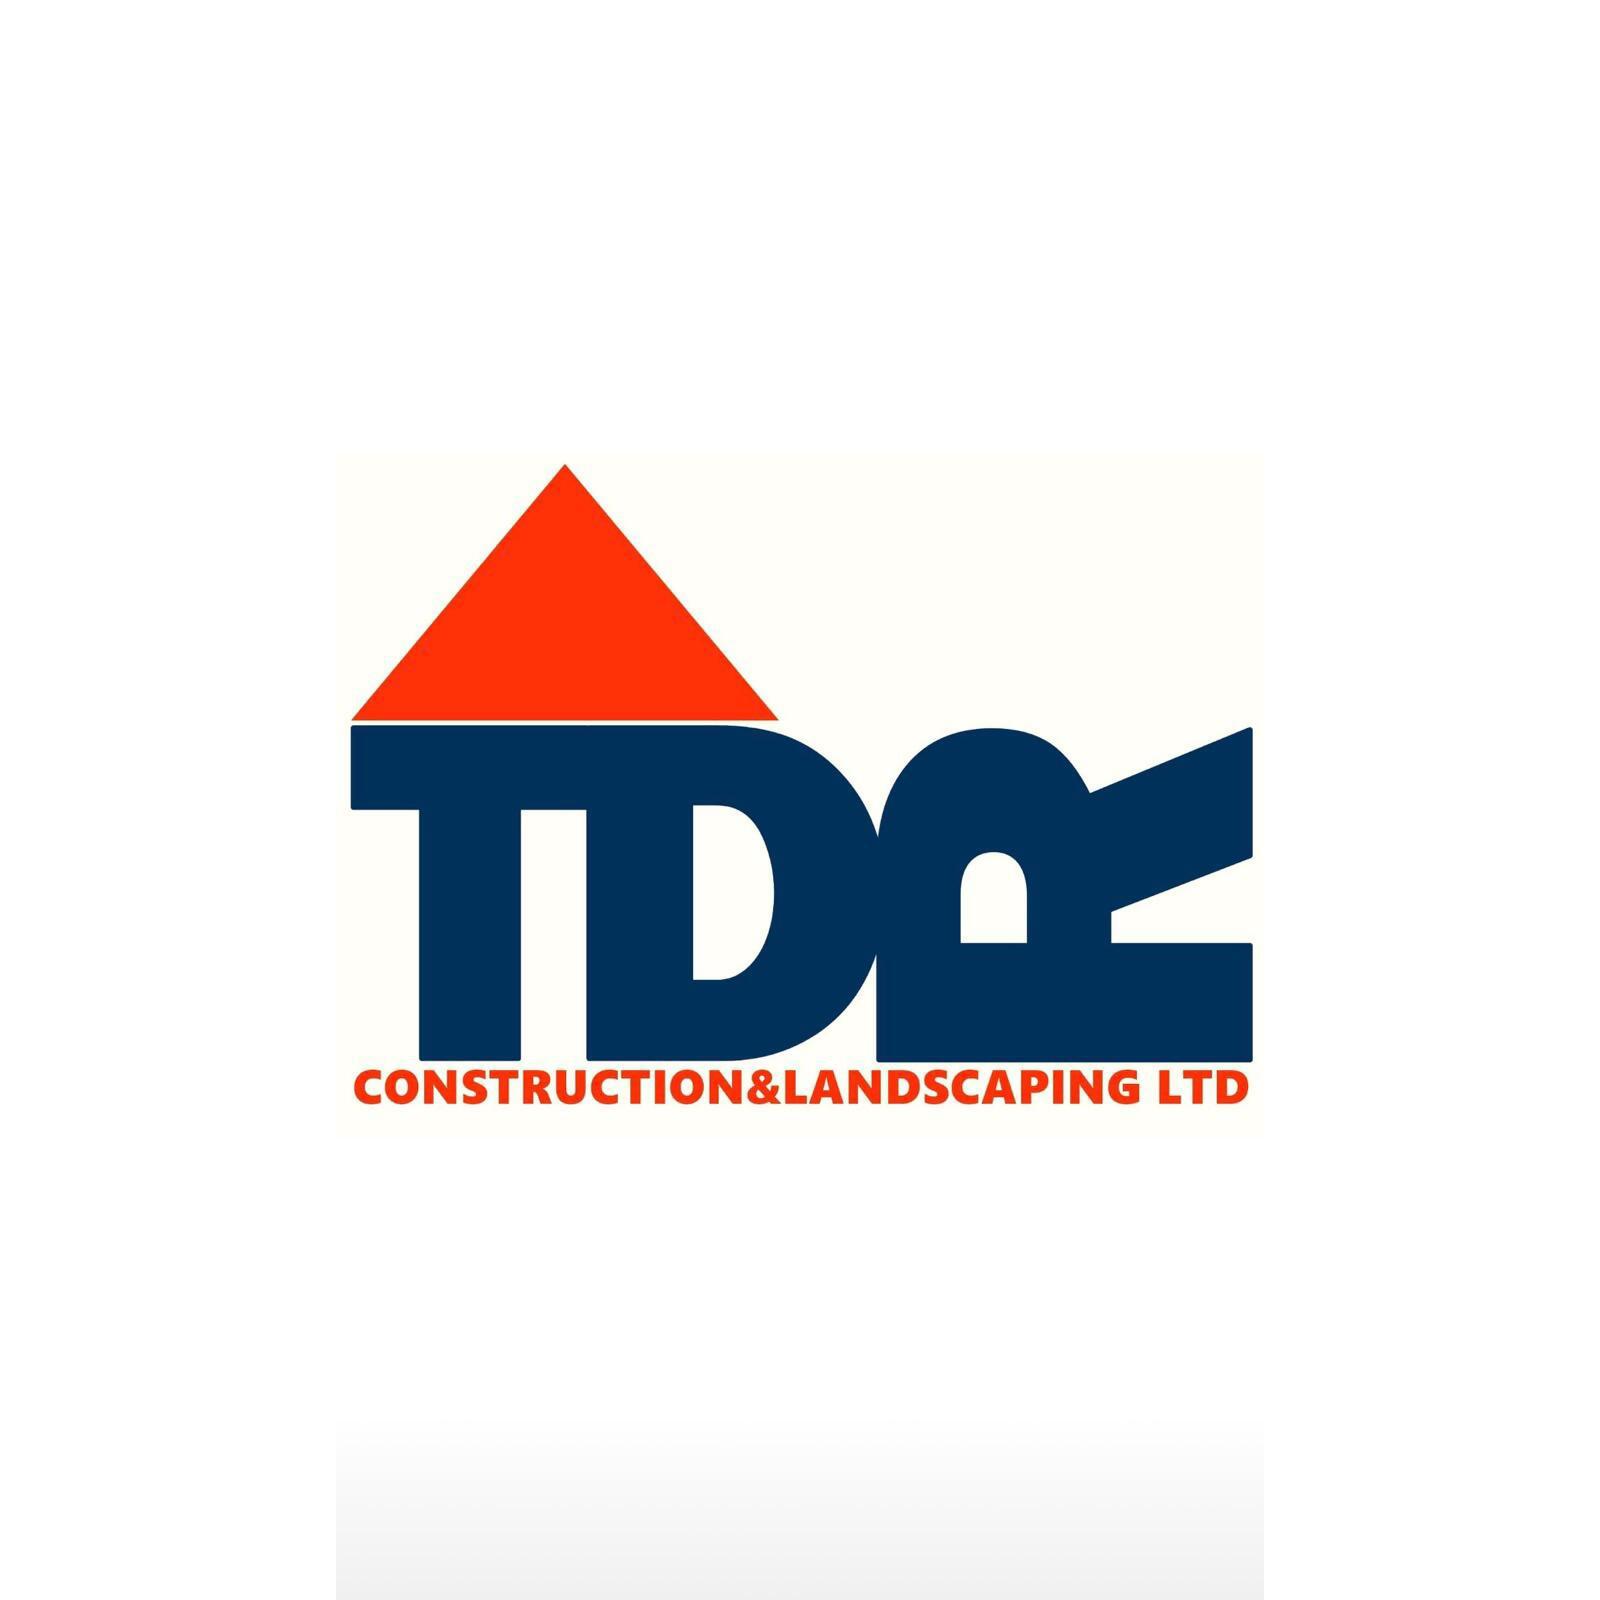 TDR Construction & Landscaping Ltd - London, London NW7 2LF - 07796 397117 | ShowMeLocal.com